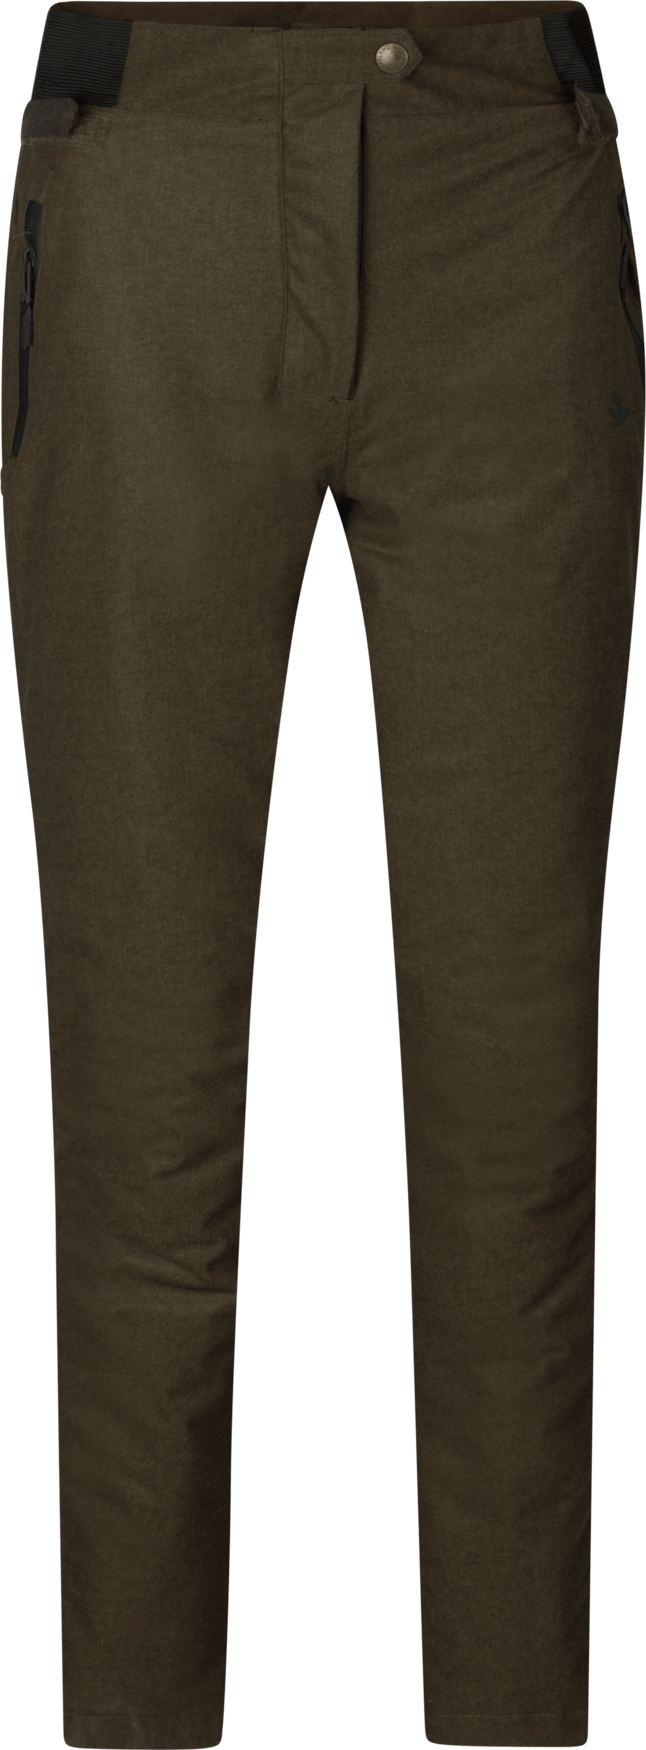 Seeland Women's Avail Aya Insulated Pants Pine Green/Demitasse Brown Seeland